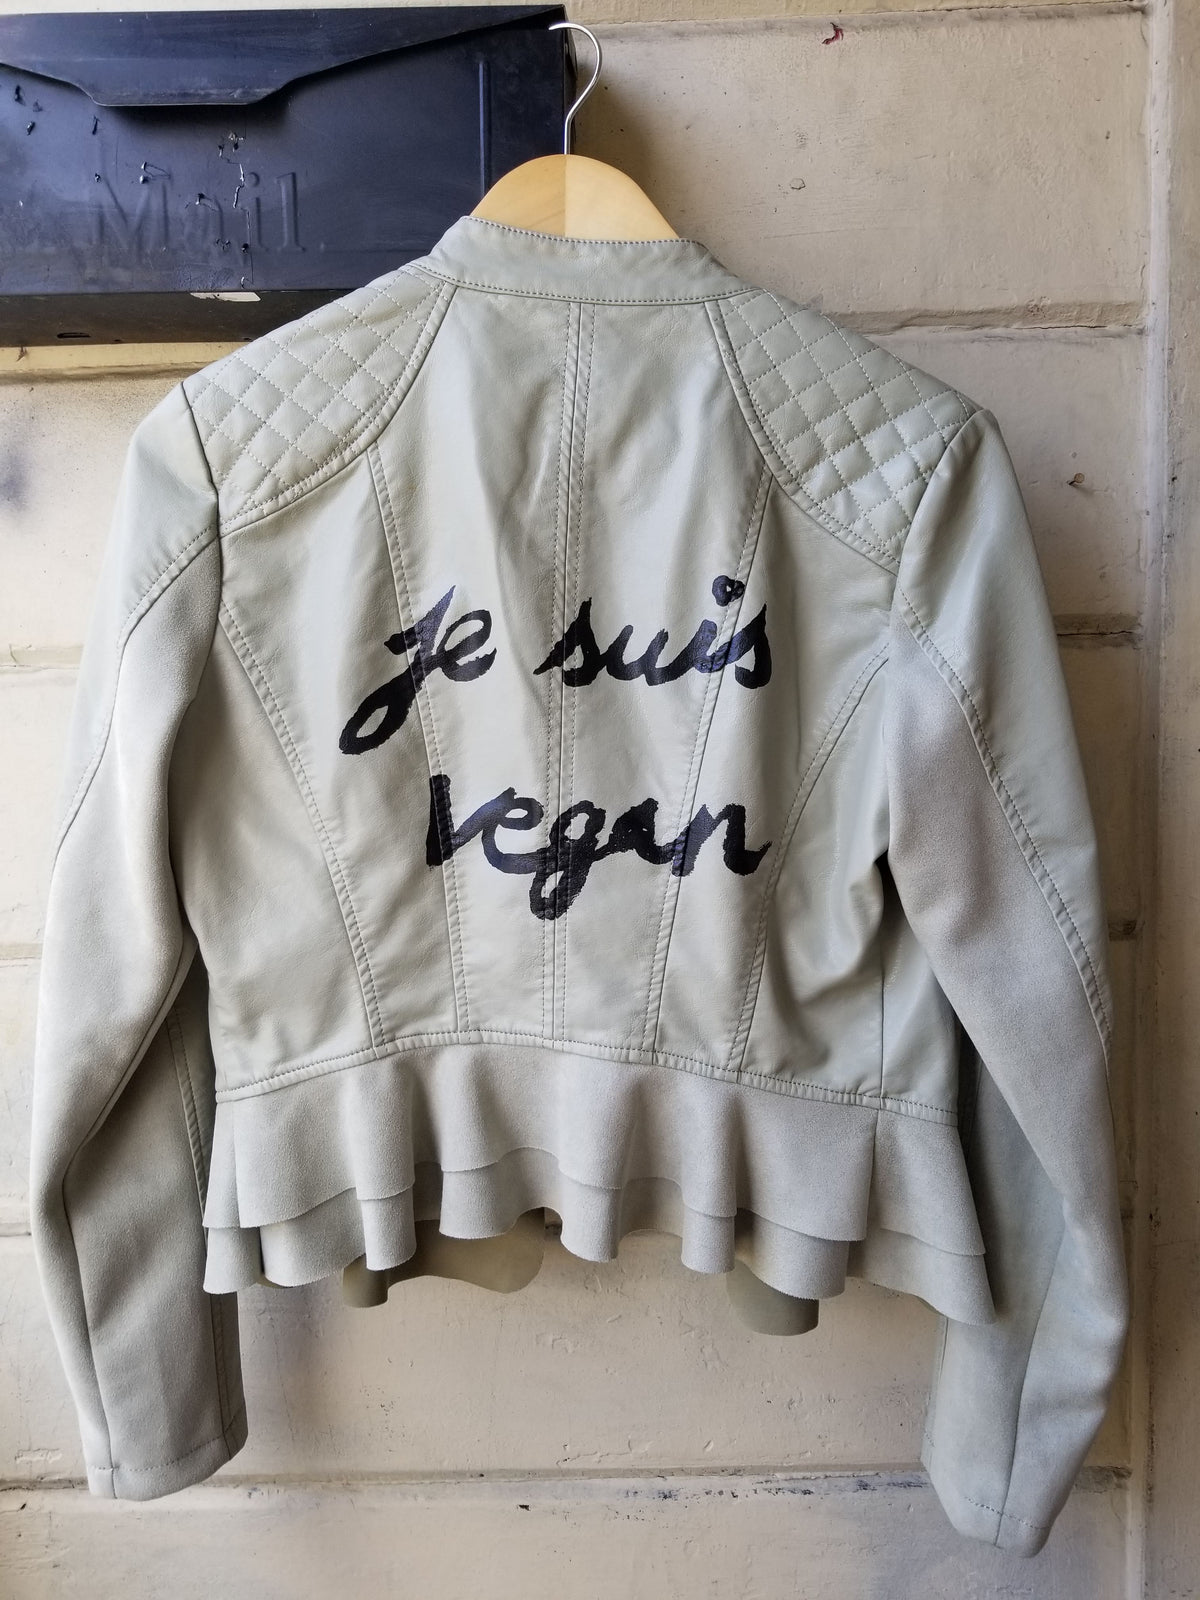 SOLD OUT - Je Suis Vegan Faux Leather Jacket